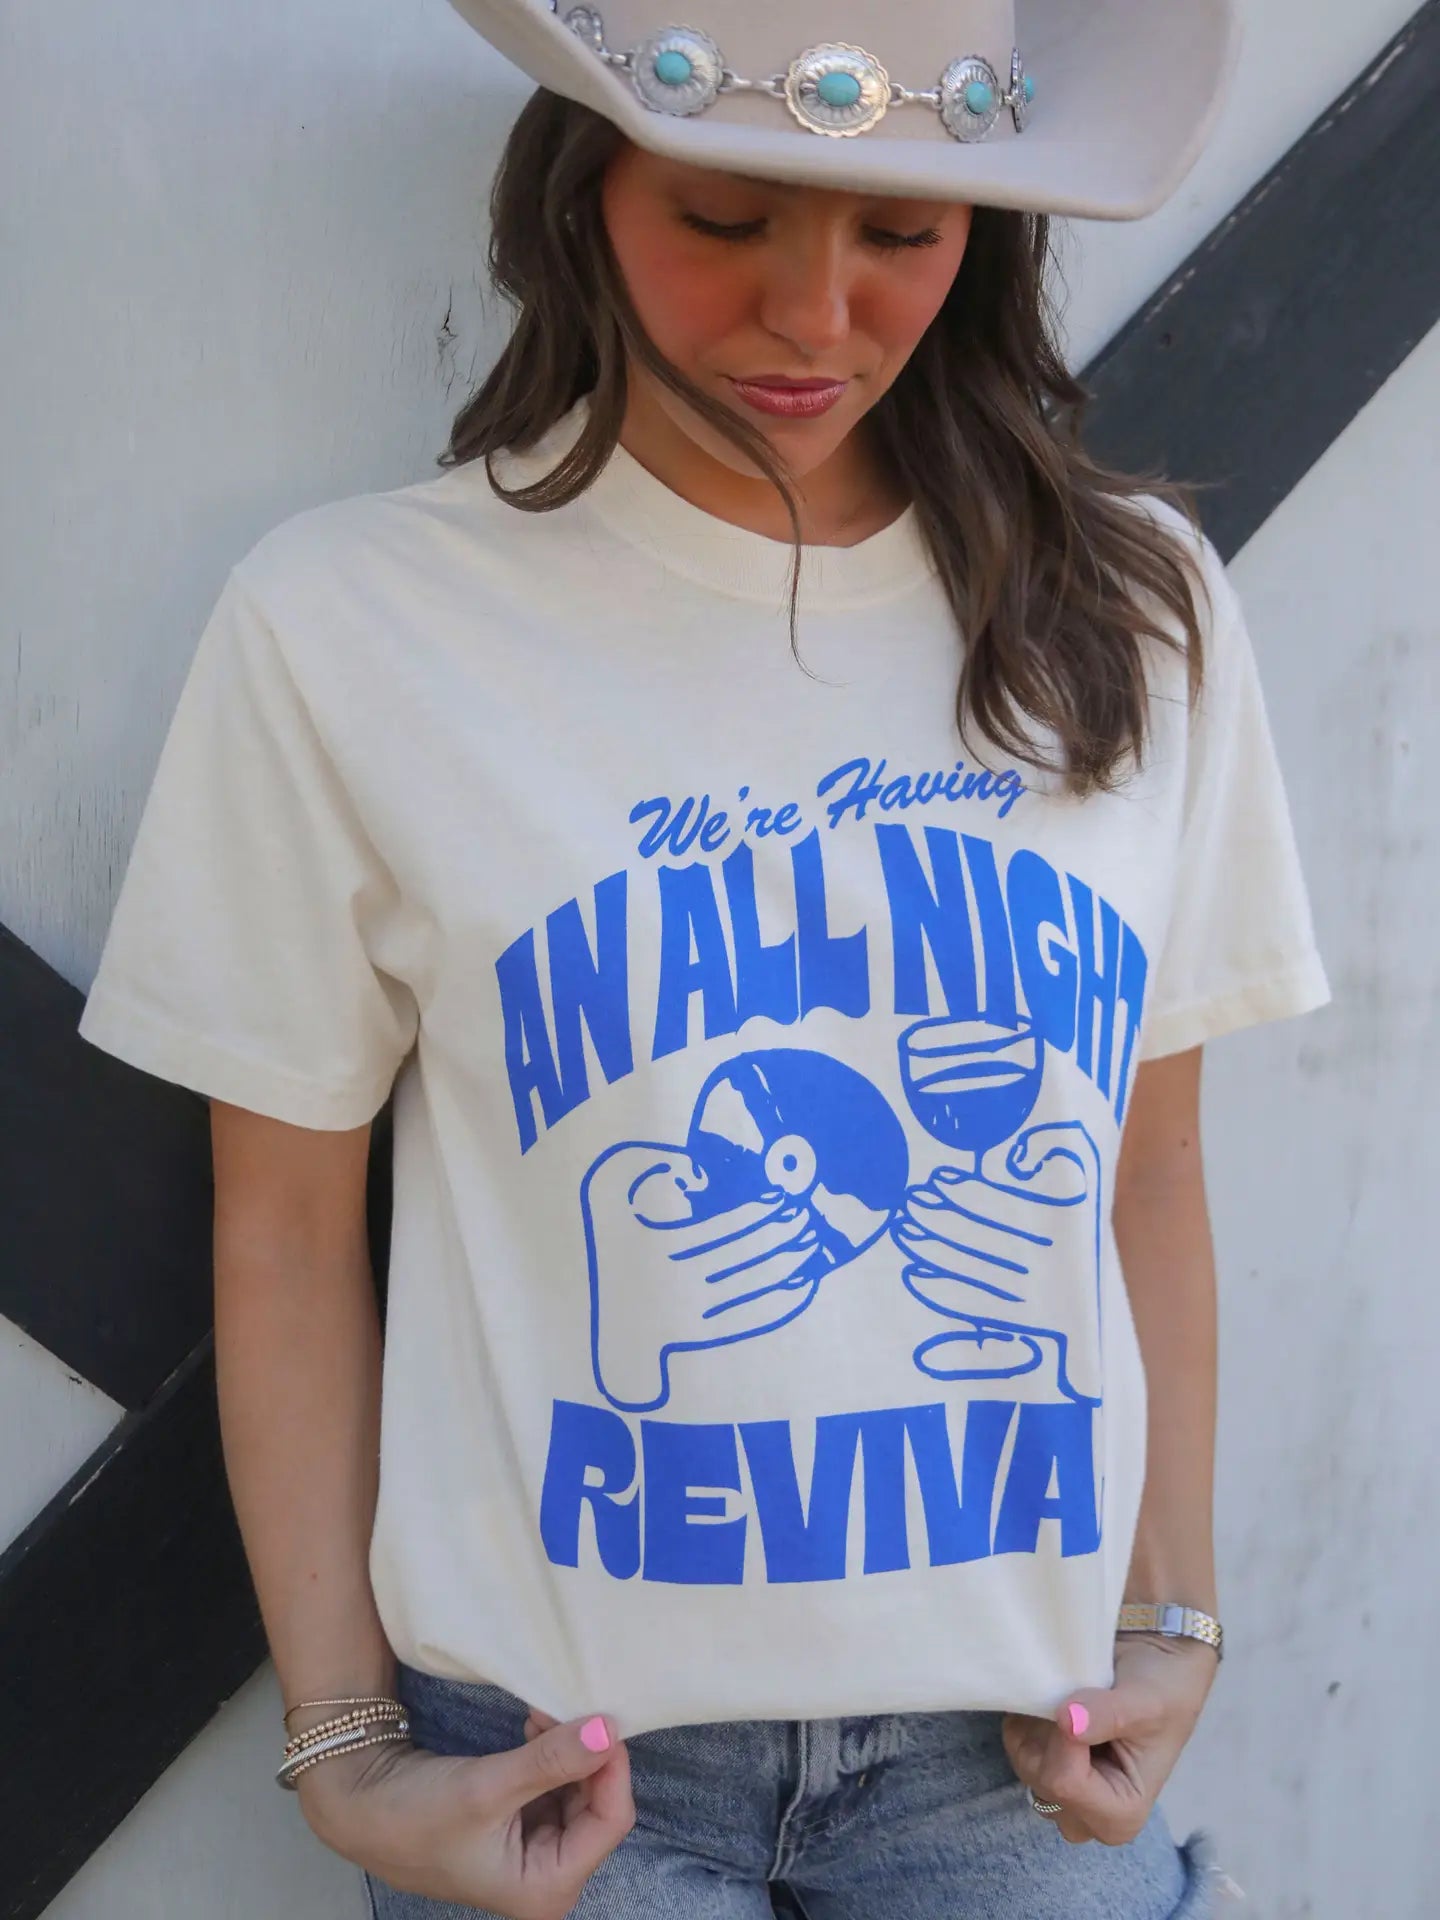 All Night Revival T-Shirt